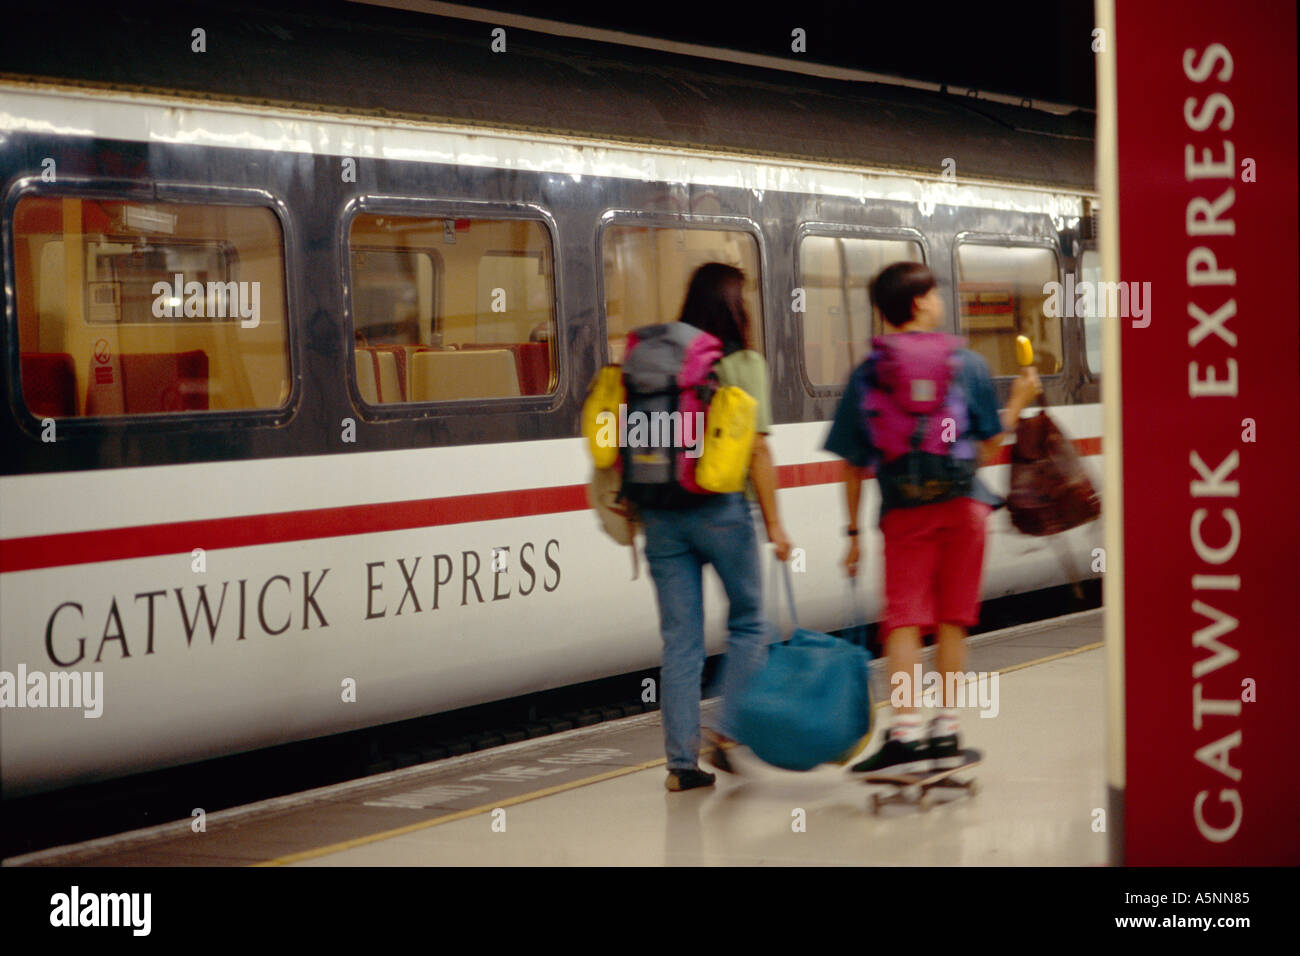 The 'Gatwick Express'.